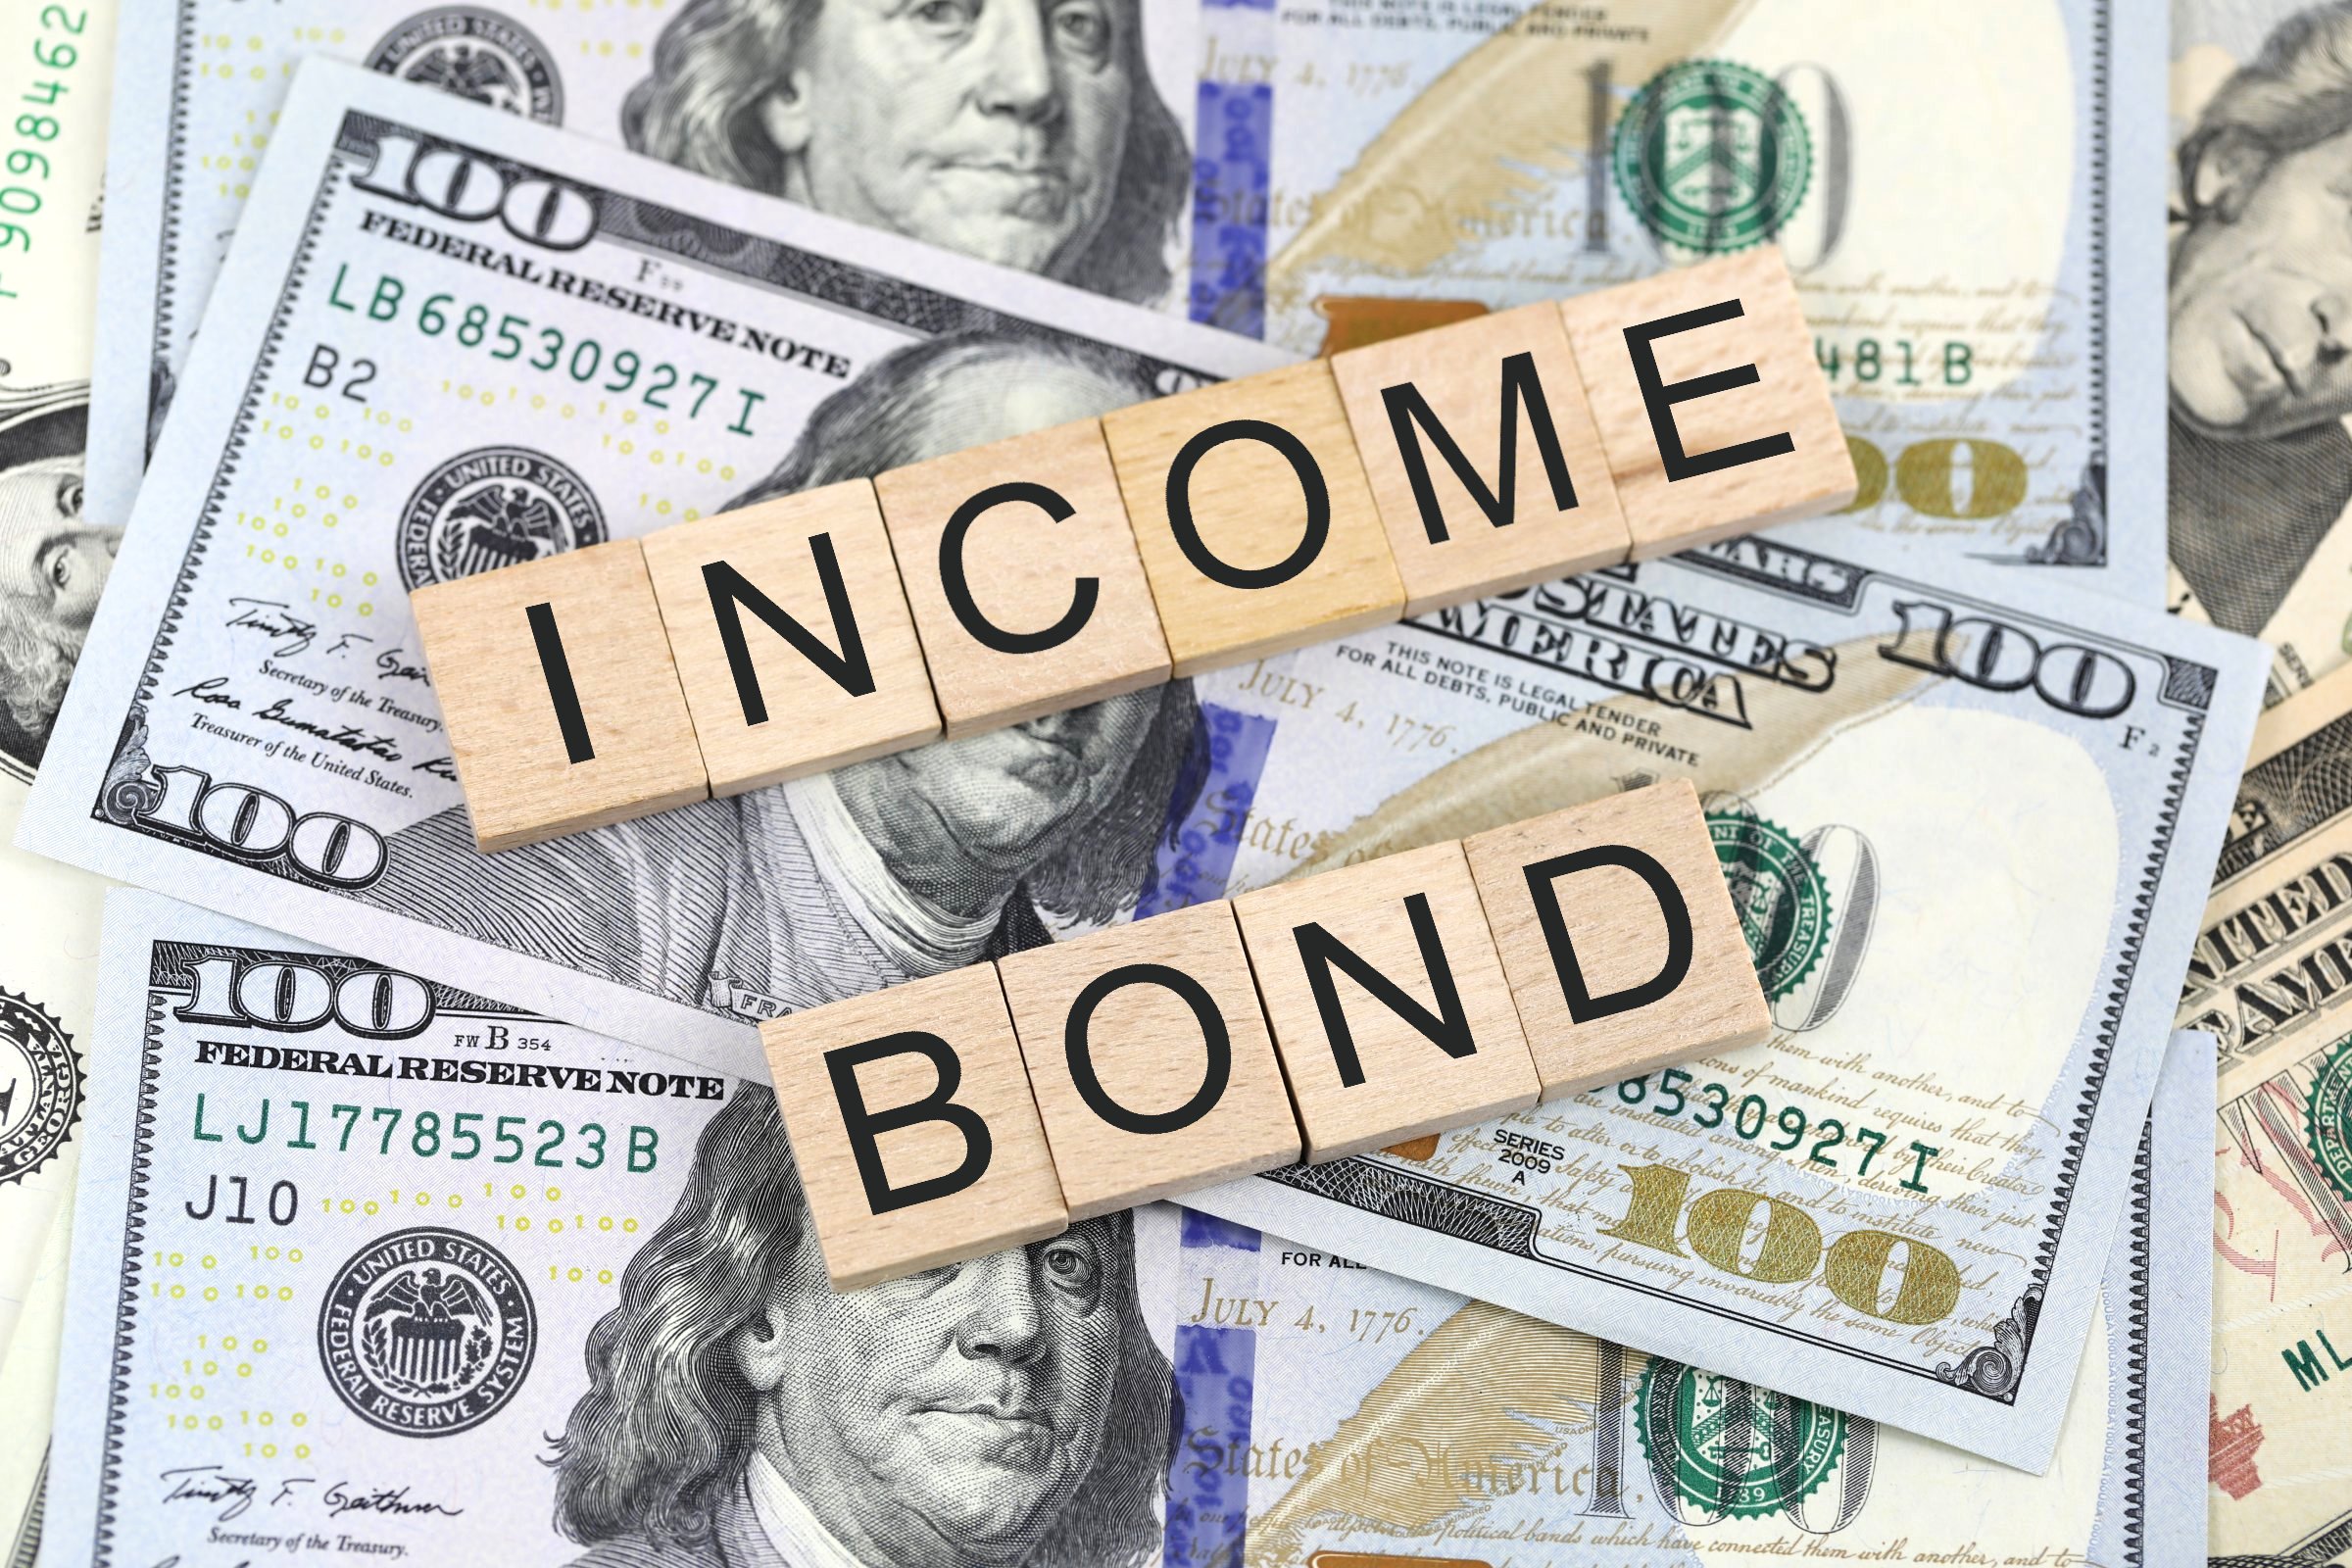 income bond